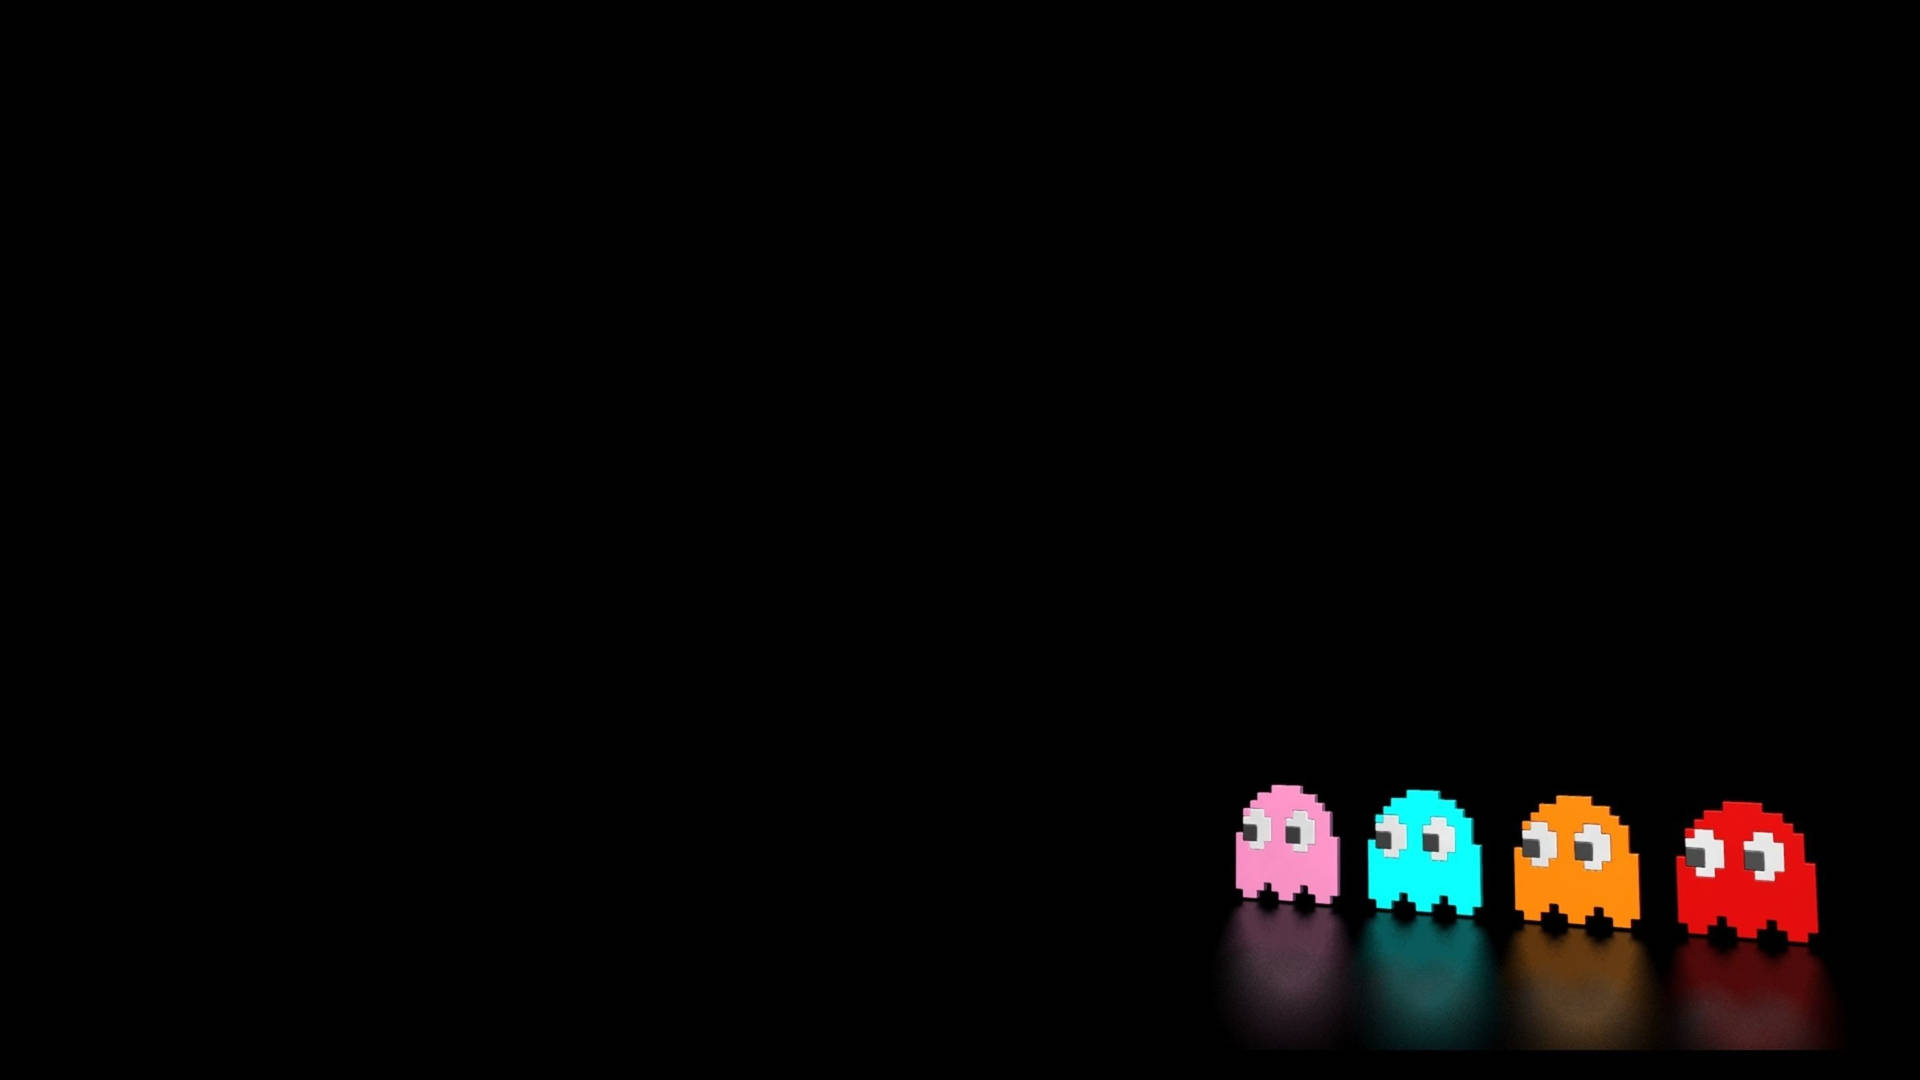 Aesthetic Retro Pac-man Ghosts